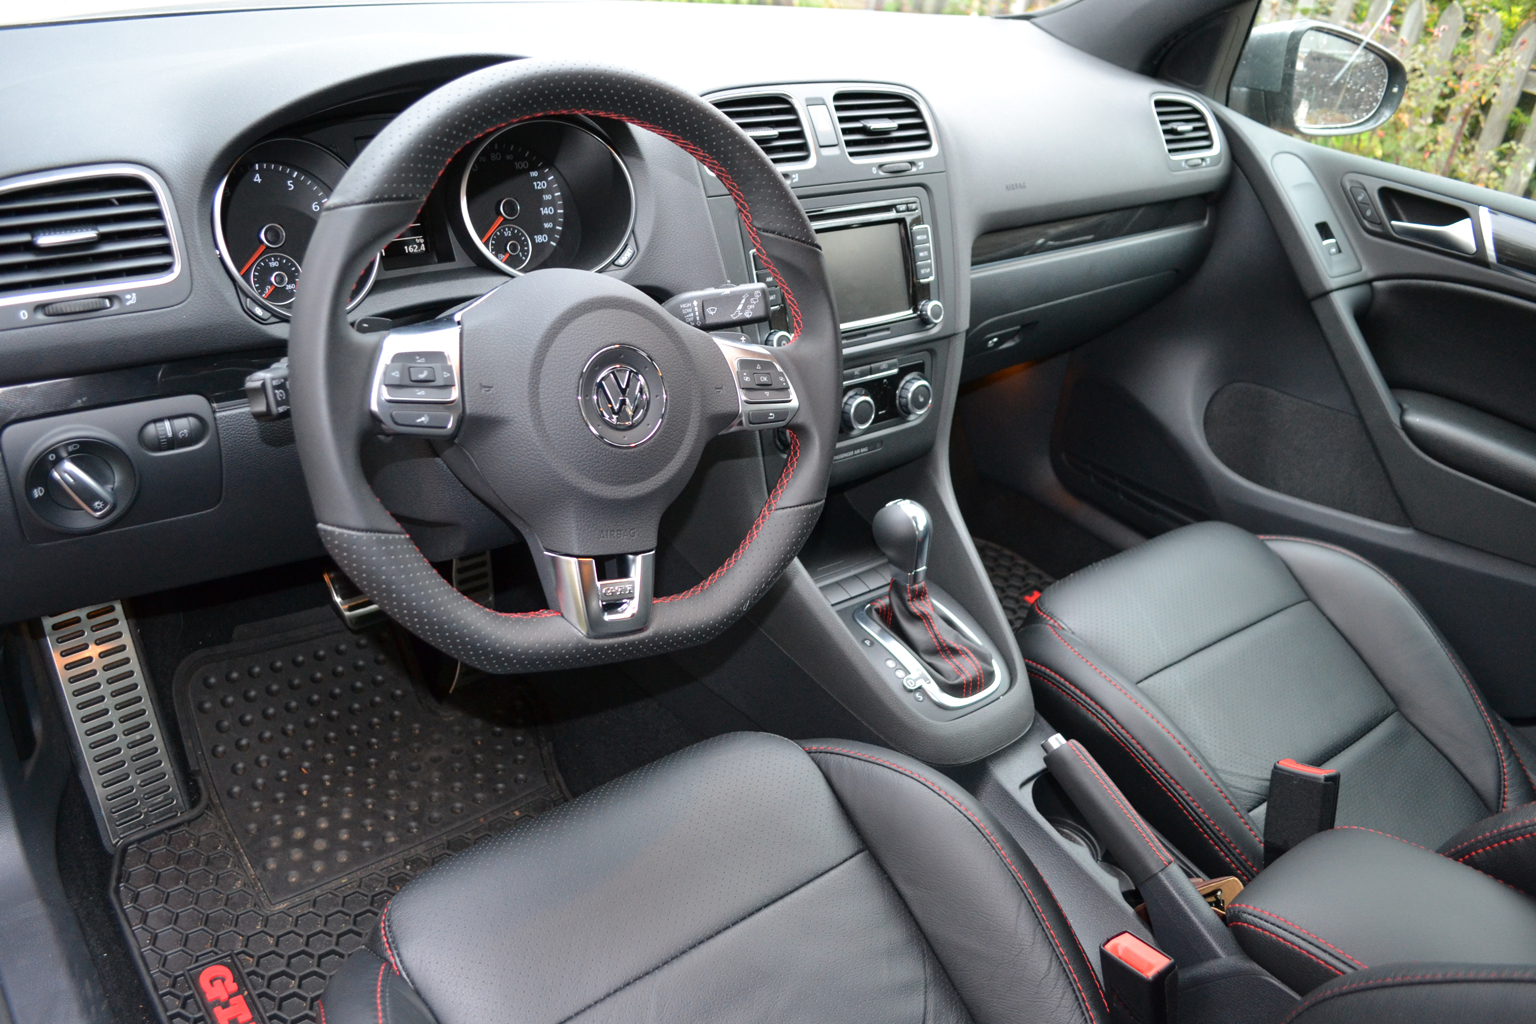 Tip Custom Interior In Leather On New Gti Volkswagen Gti